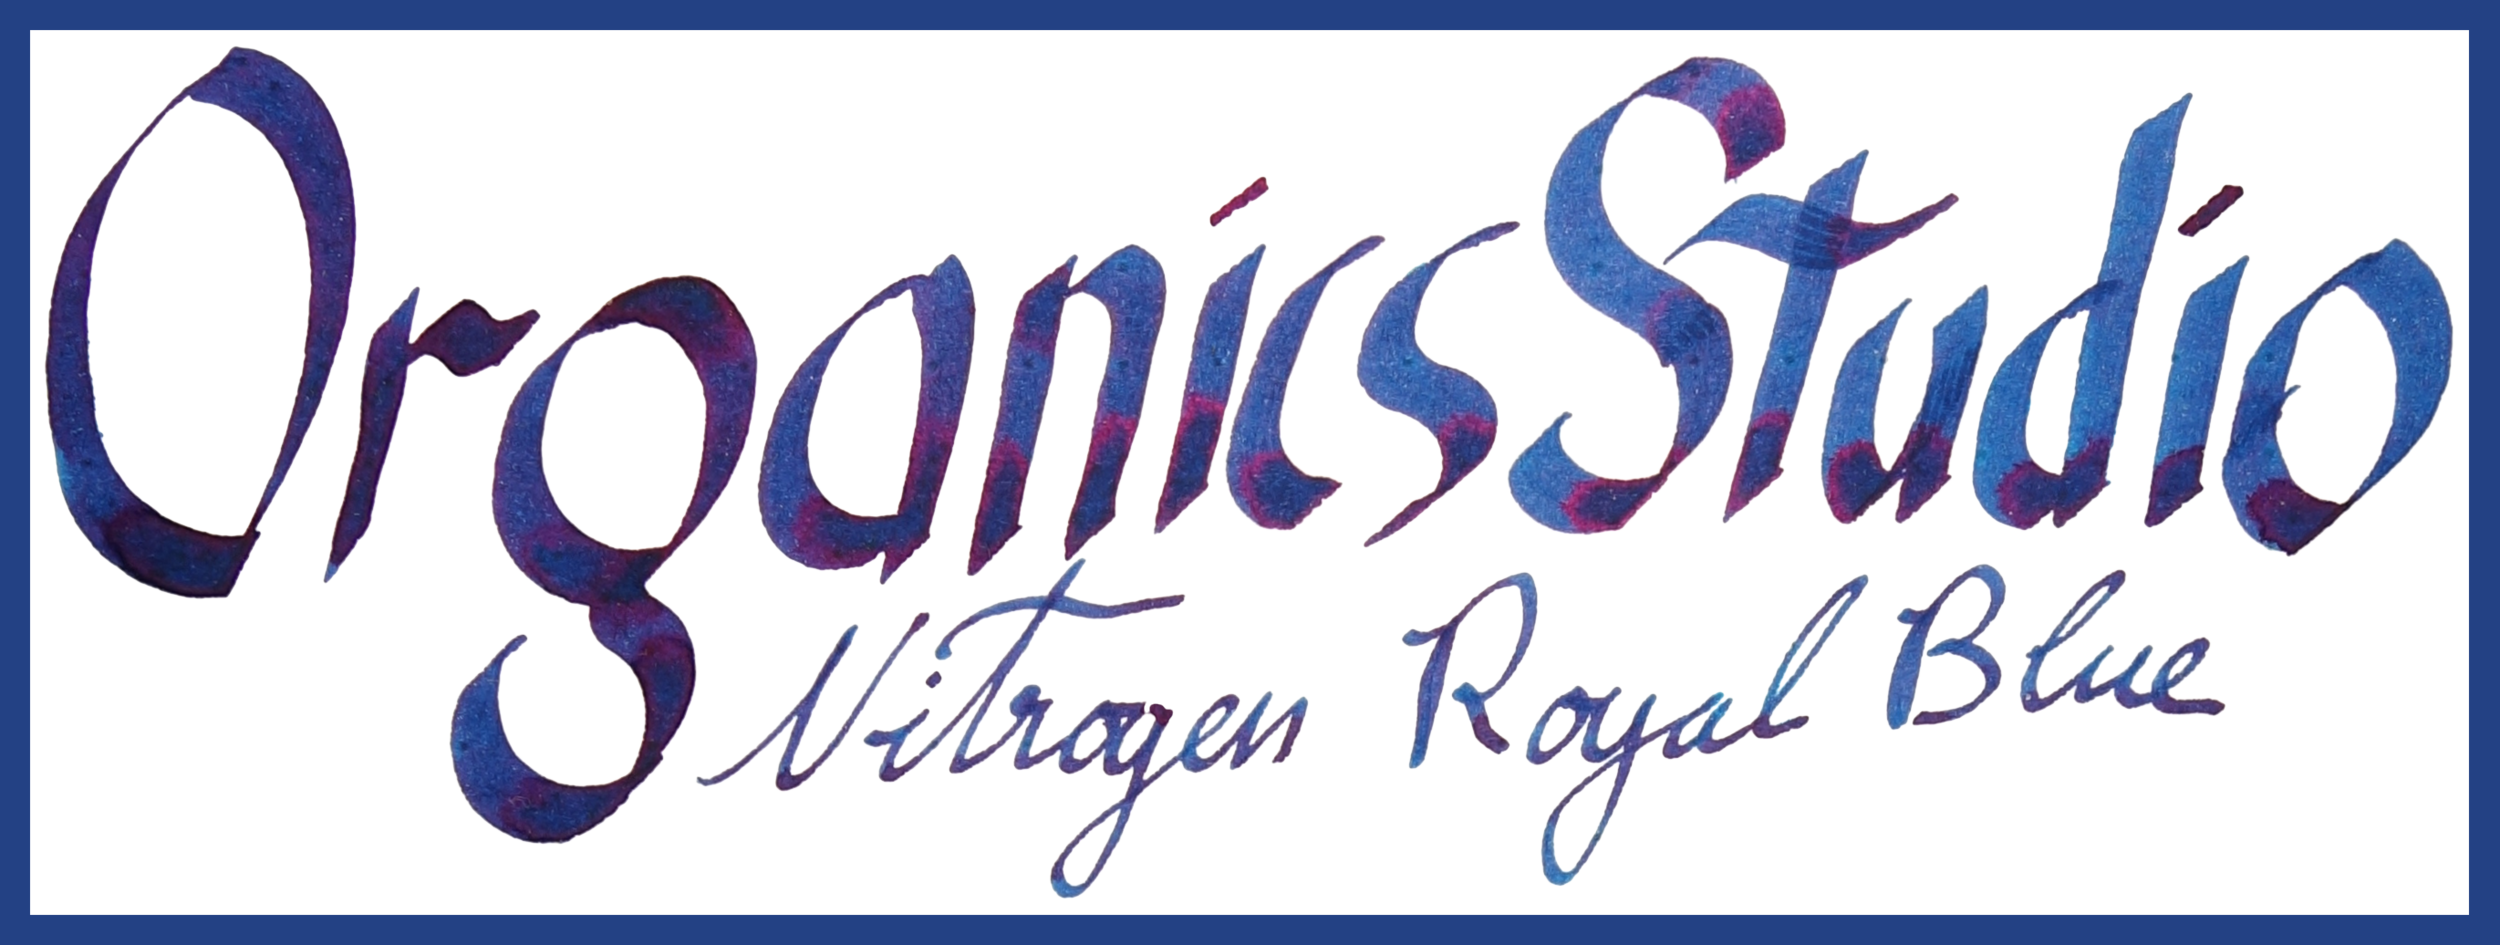 Ink Review: Organics Studio Nitrogen Royal Blue — Macchiato Man